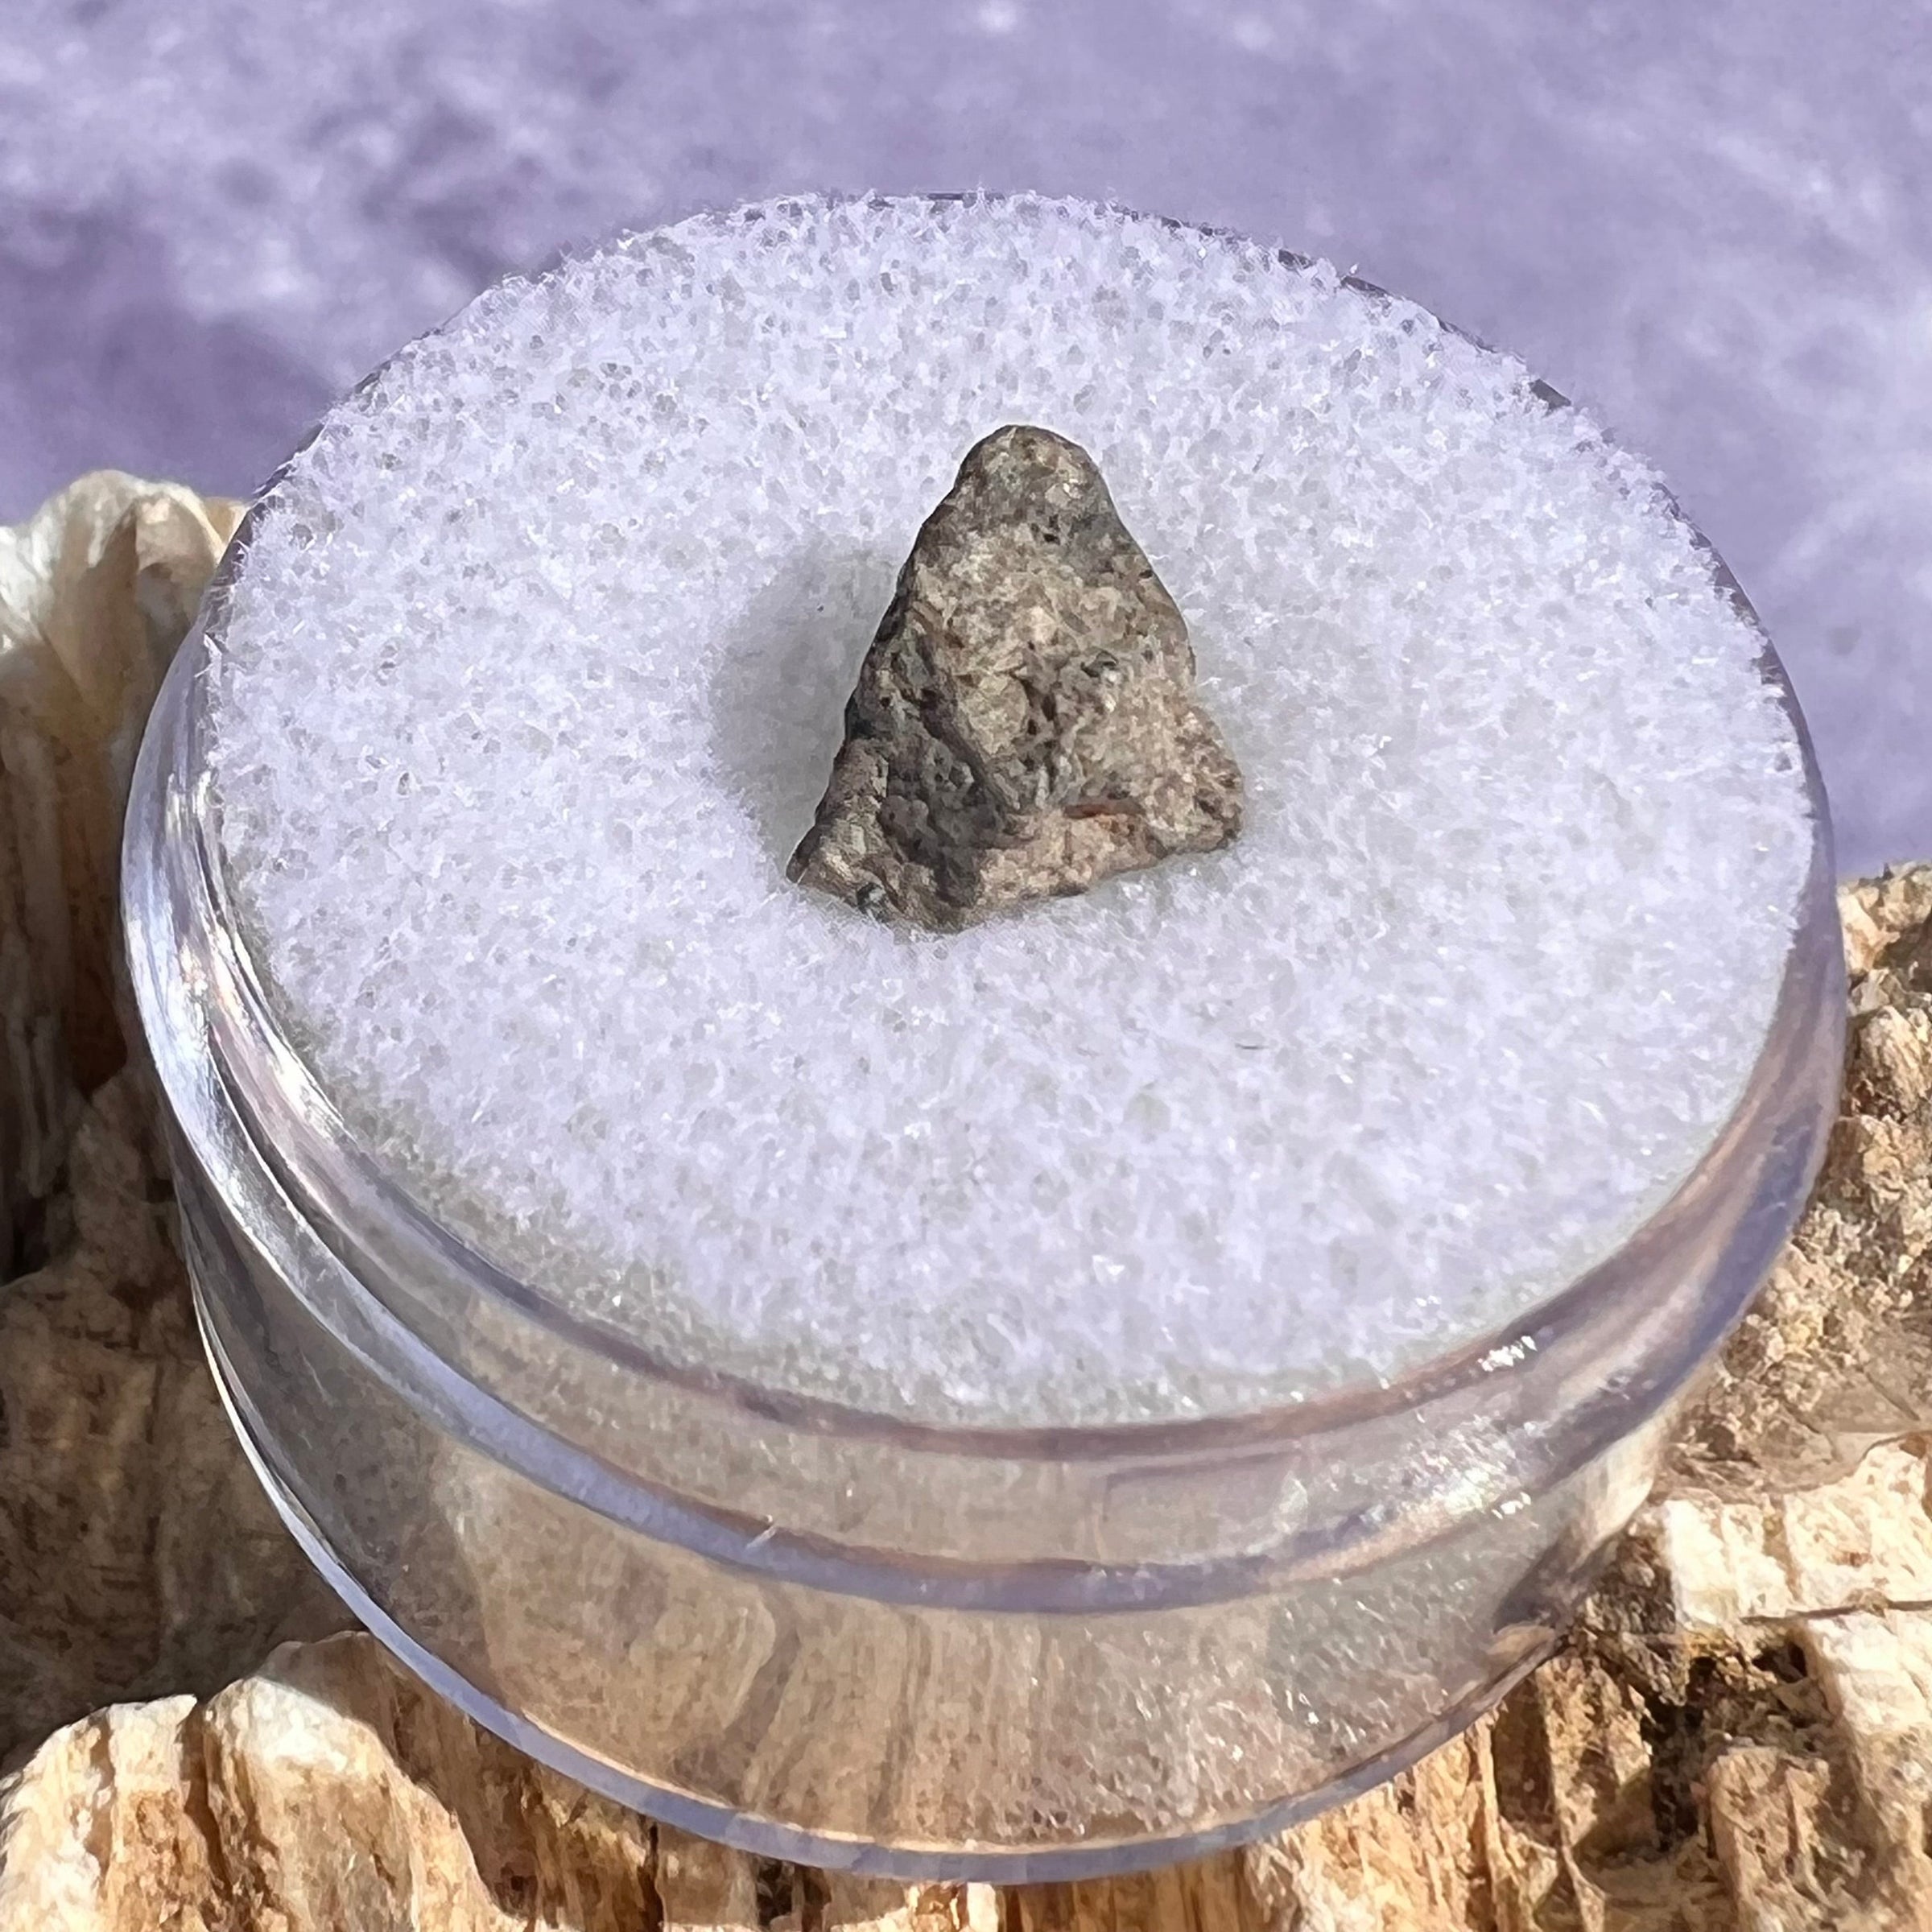 NWA 13974 Lunar Meteorite 0.6 grams #117-Moldavite Life